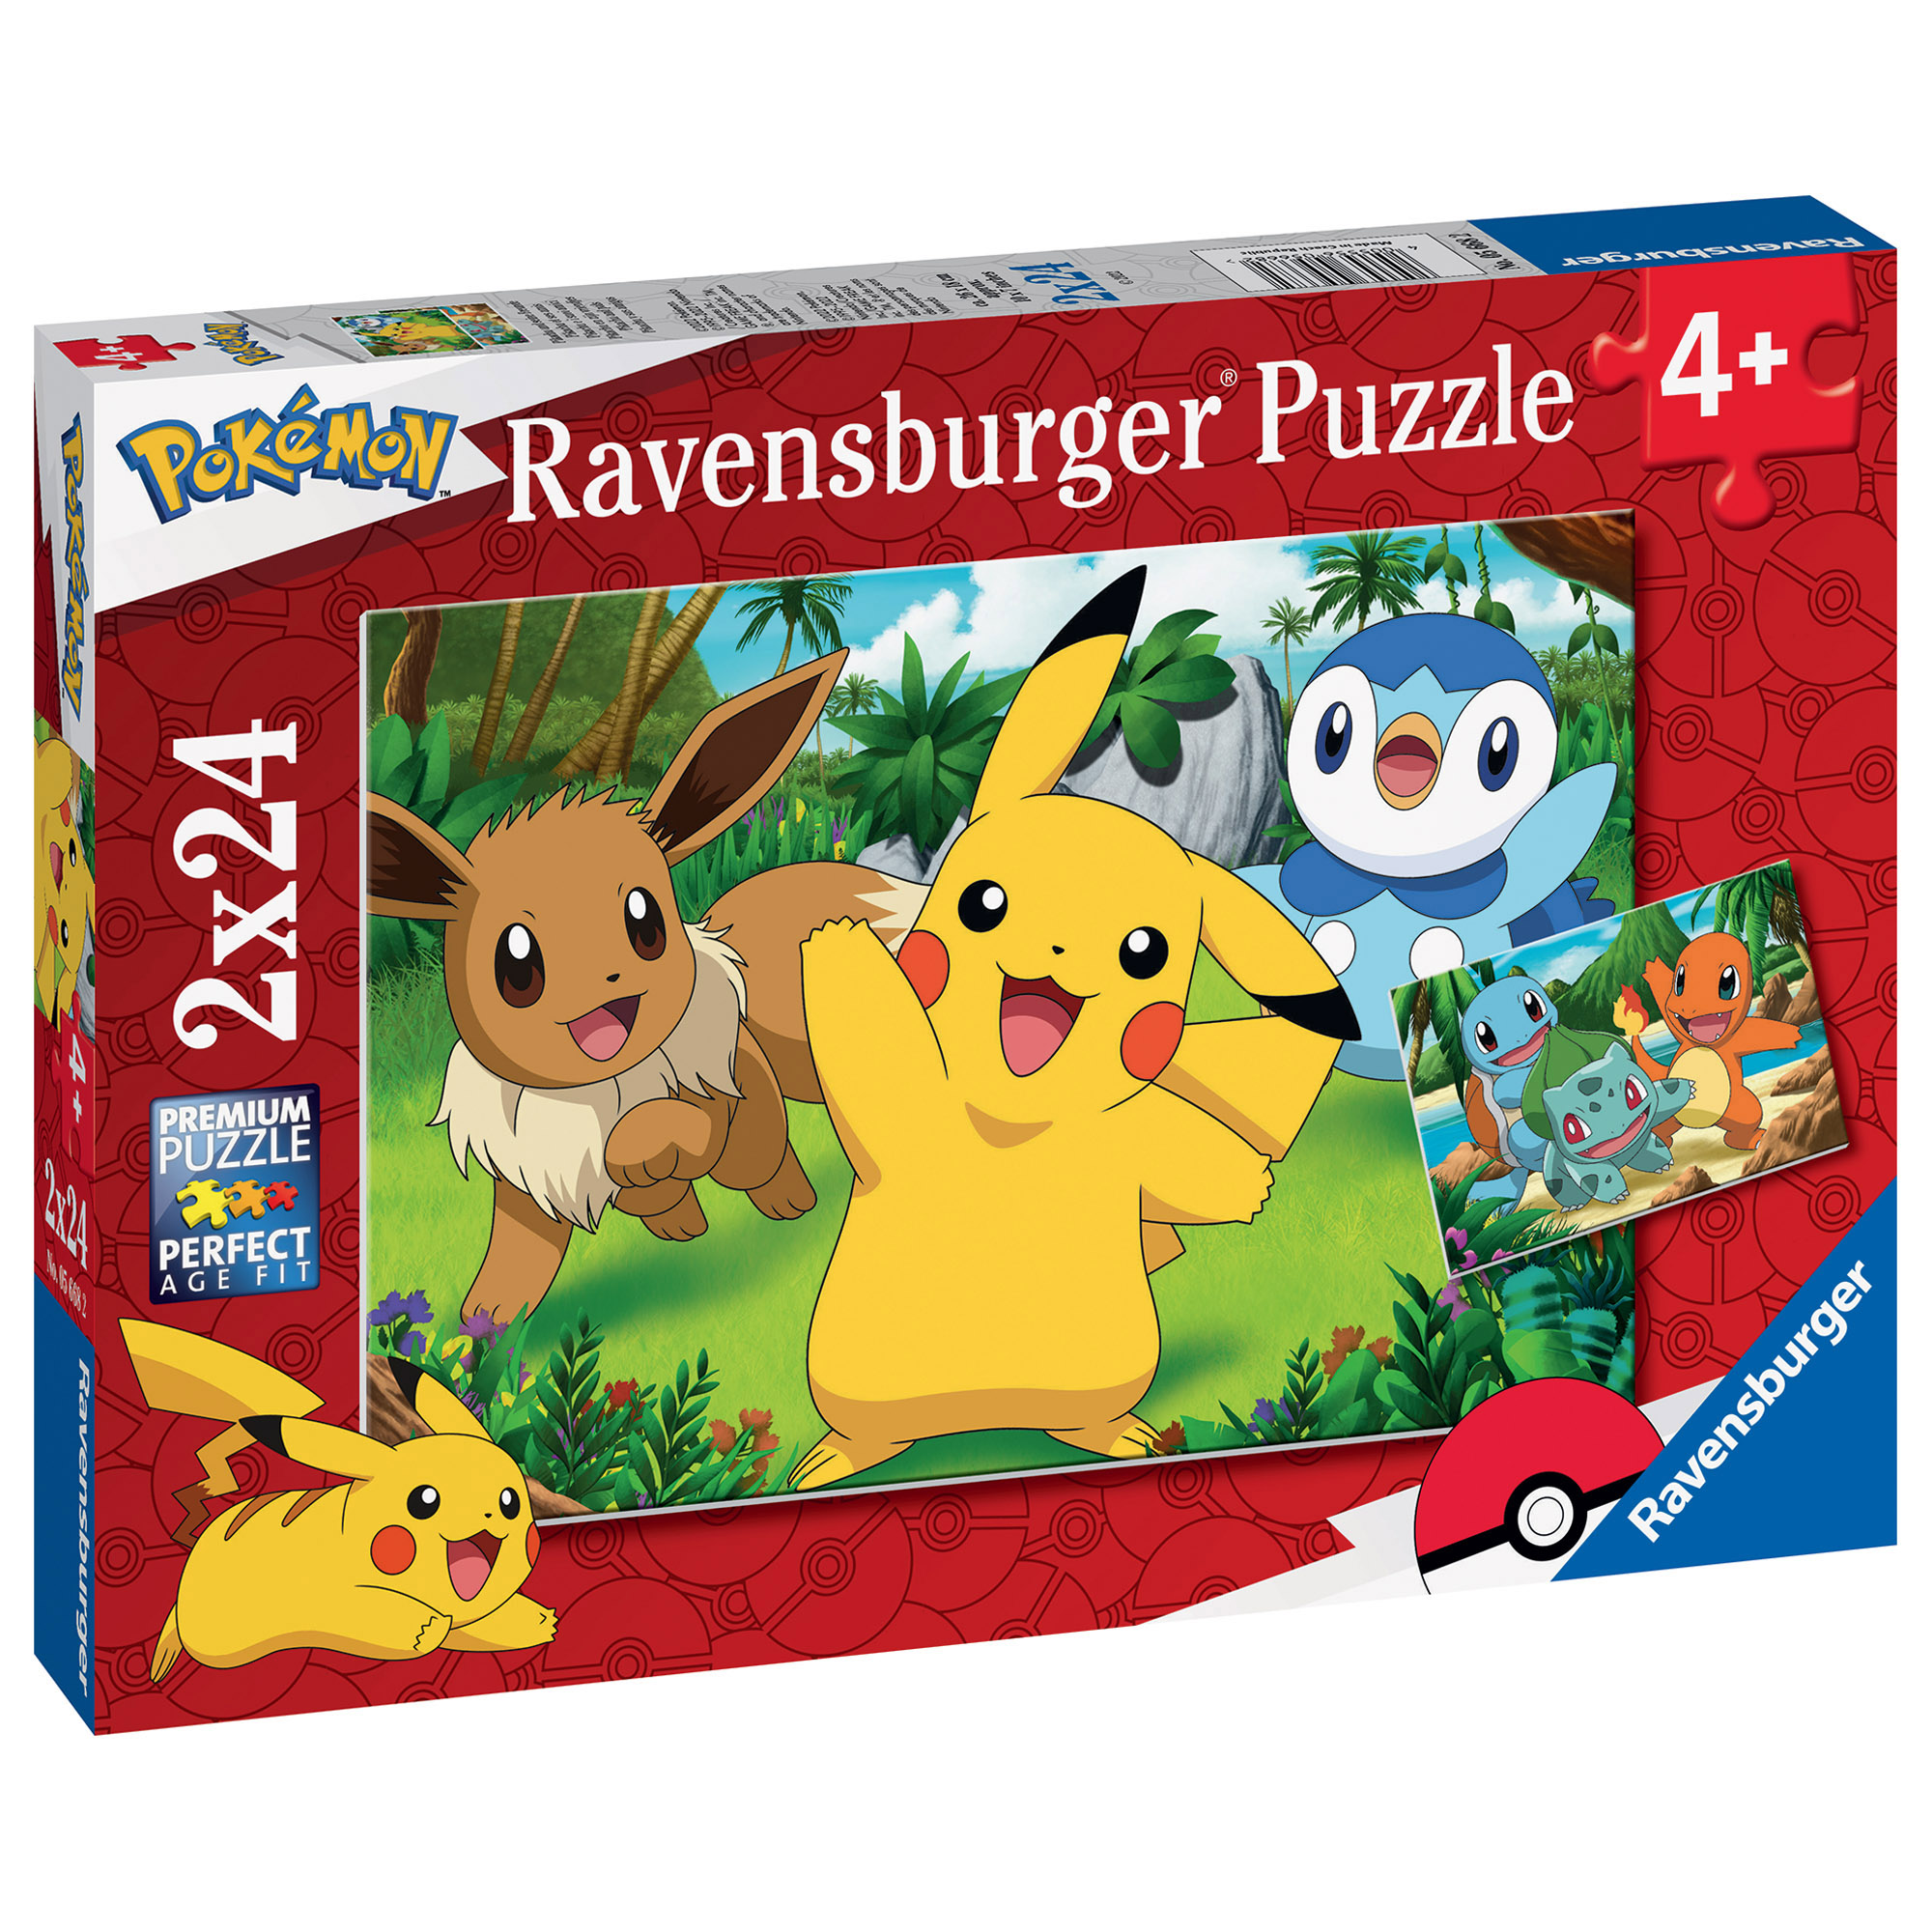 Ravensburger - puzzle pokémon, collezione 2x24, 2 puzzle da 24 pezzi, età raccomandata 4+ anni - 3751, RAVENSBURGER